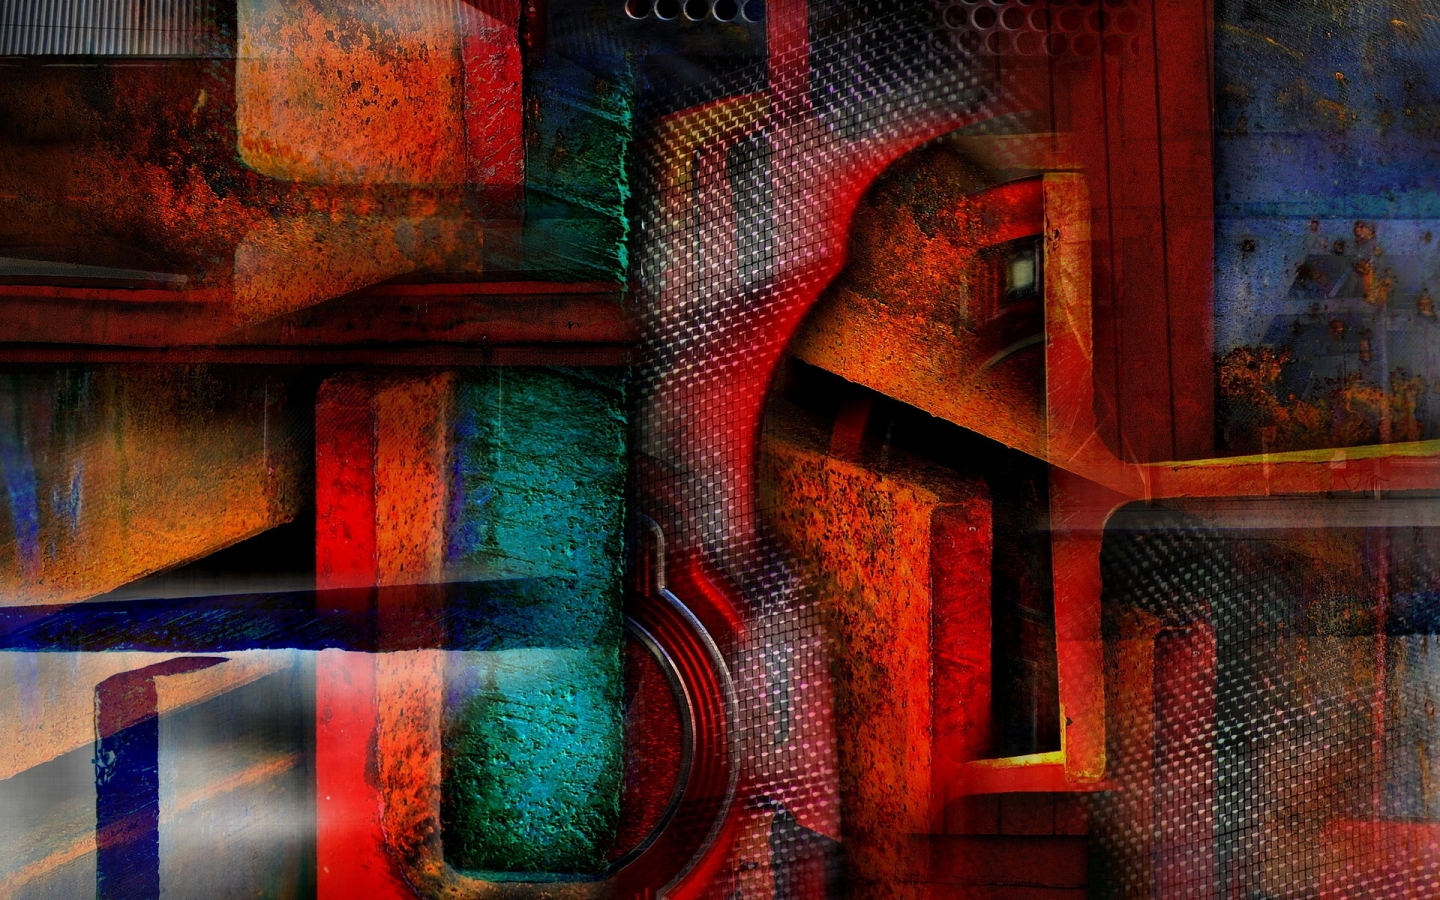 Abstract Grunge Art for 1440 x 900 widescreen resolution